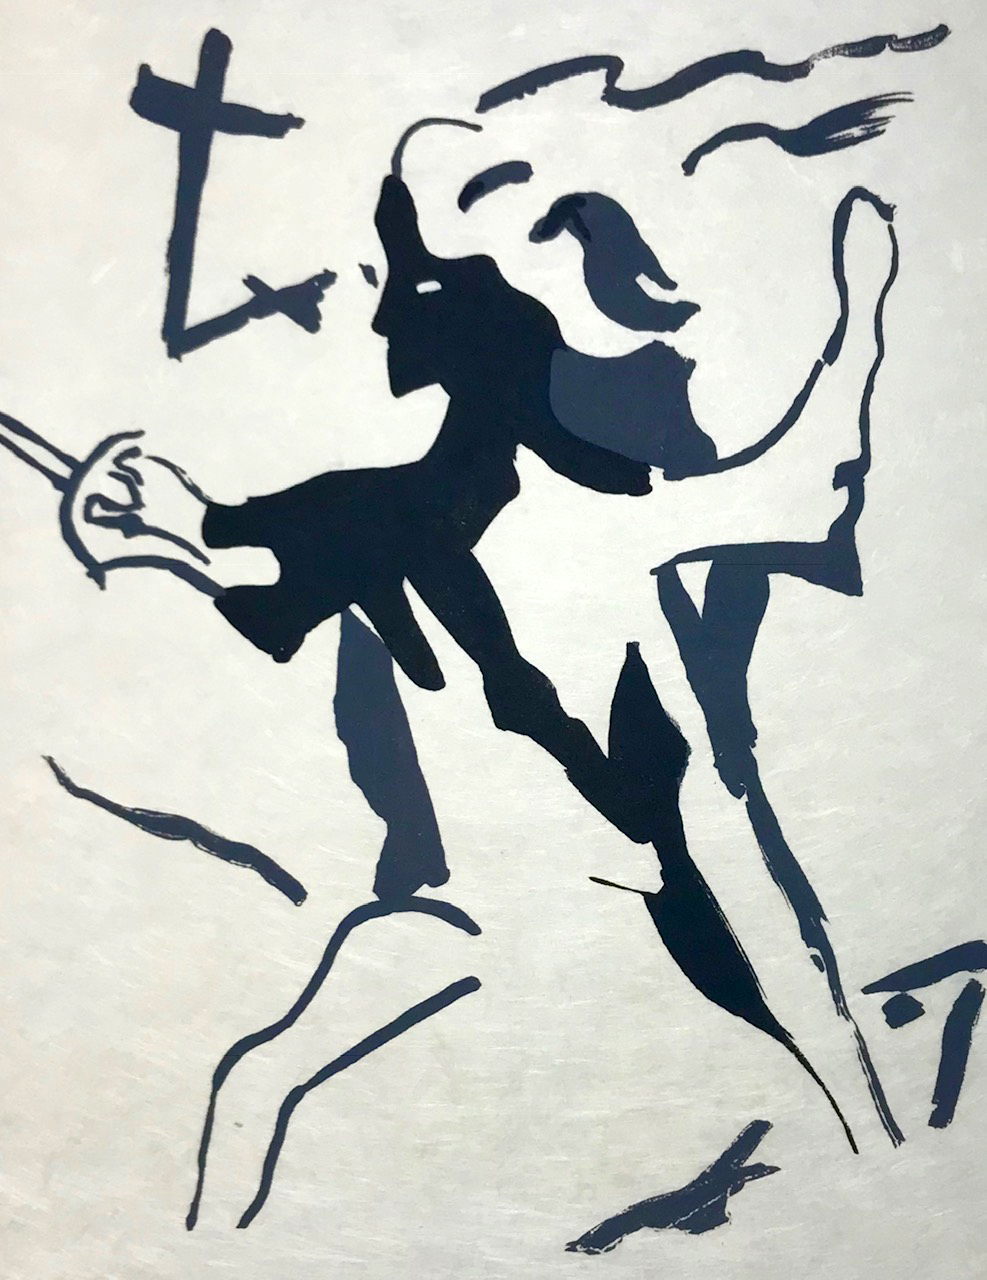 Francisco Bores "3" Original Lithograph 1962 Mourlot